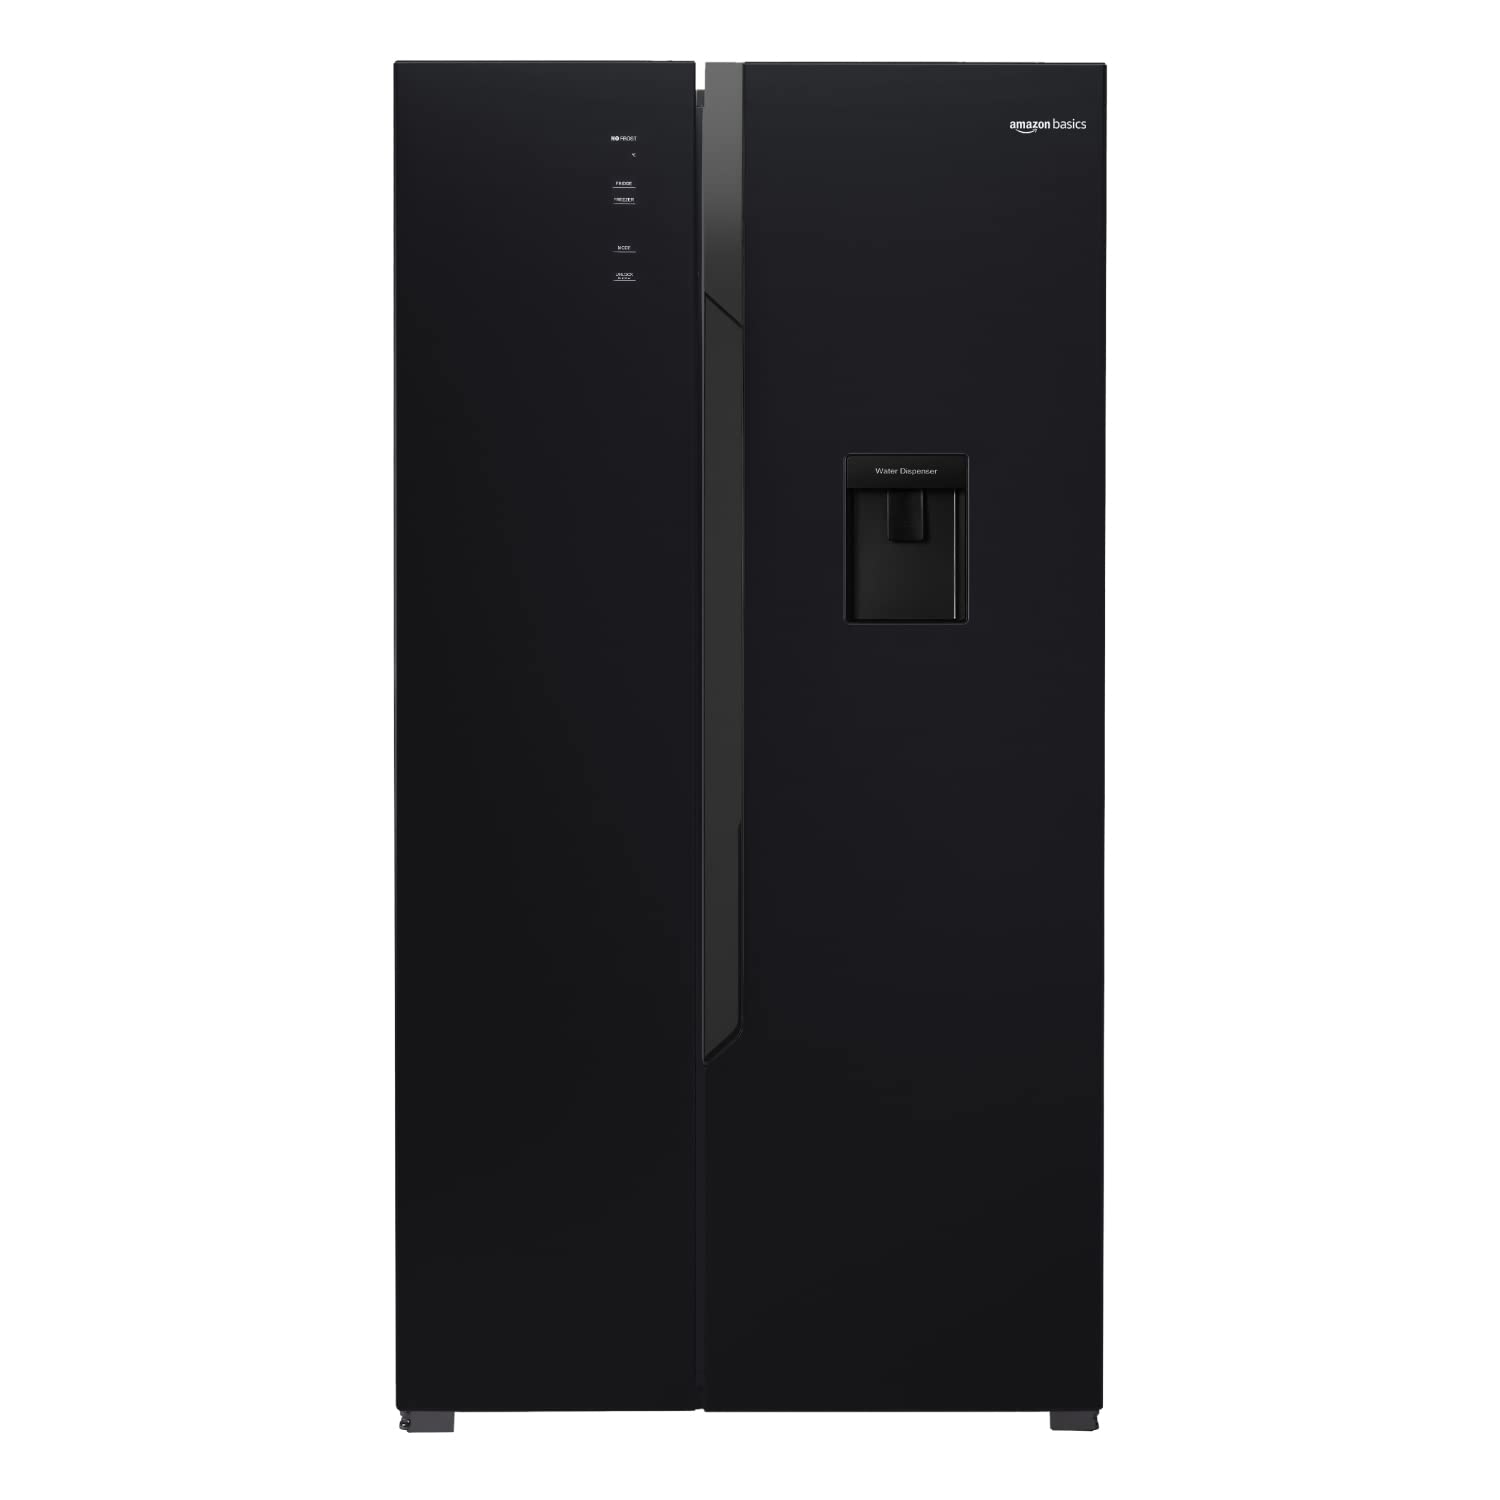 AmazonBasics Refrigerator